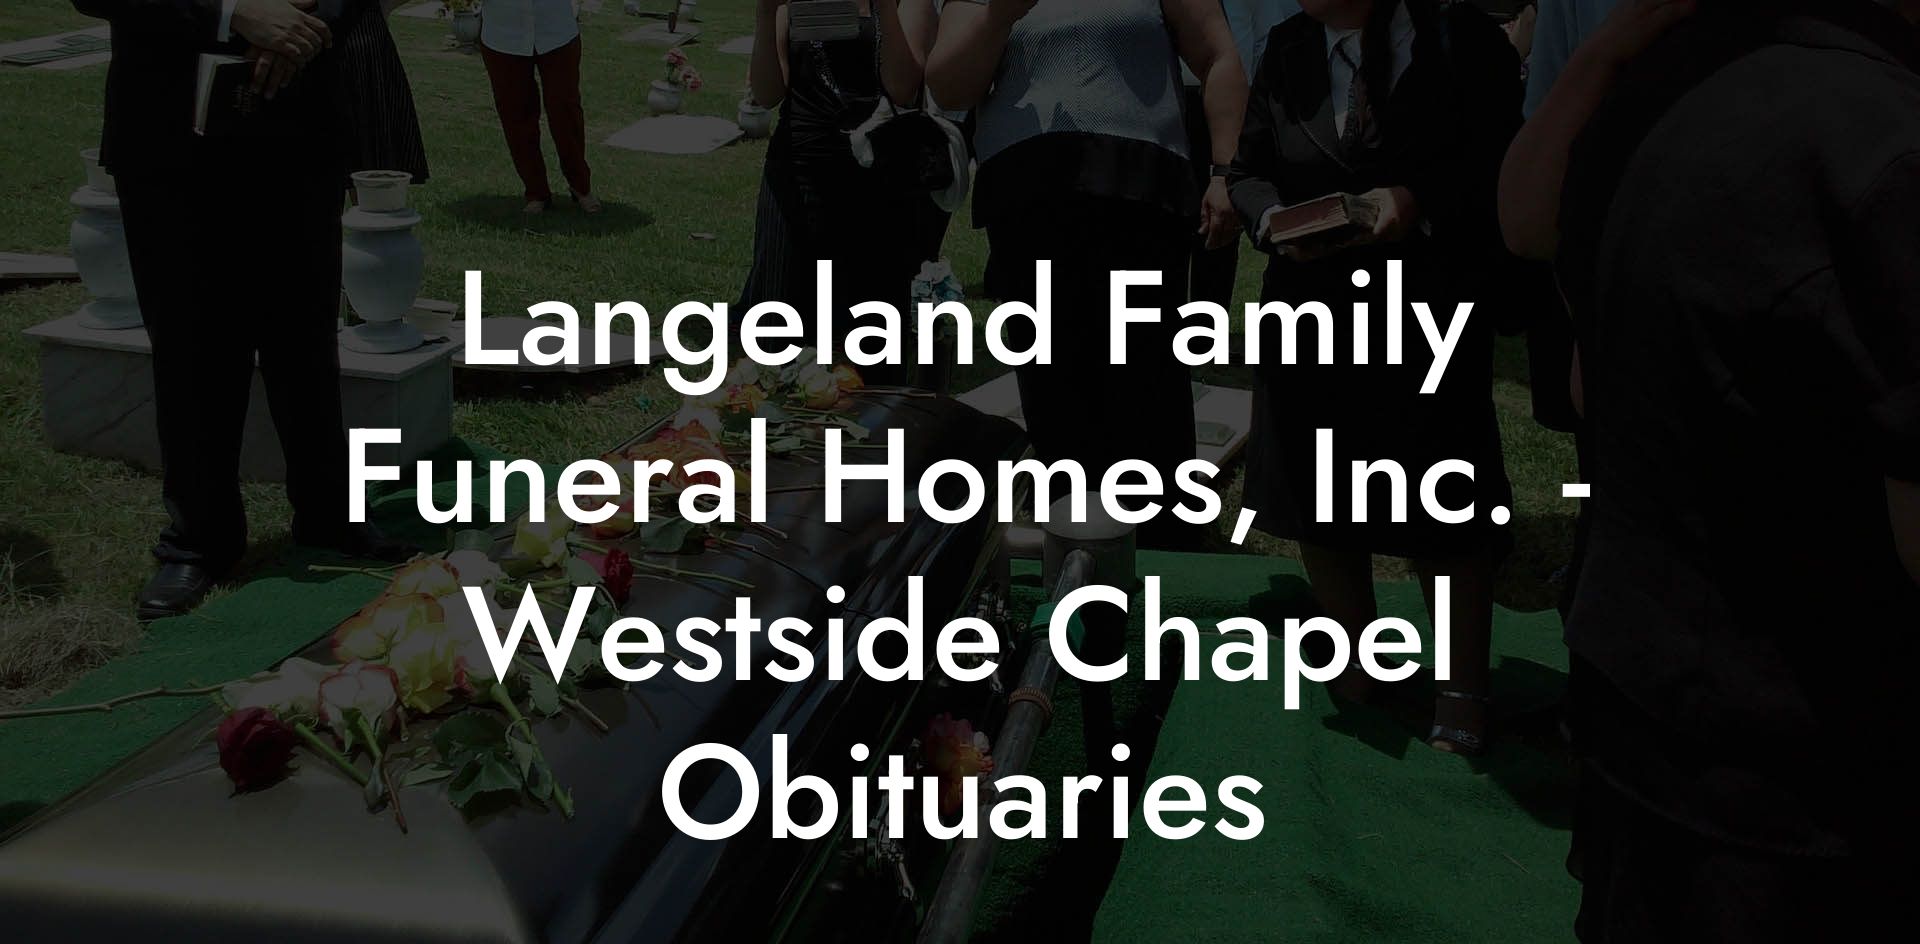 Langeland Family Funeral Homes, Inc. - Westside Chapel Obituaries